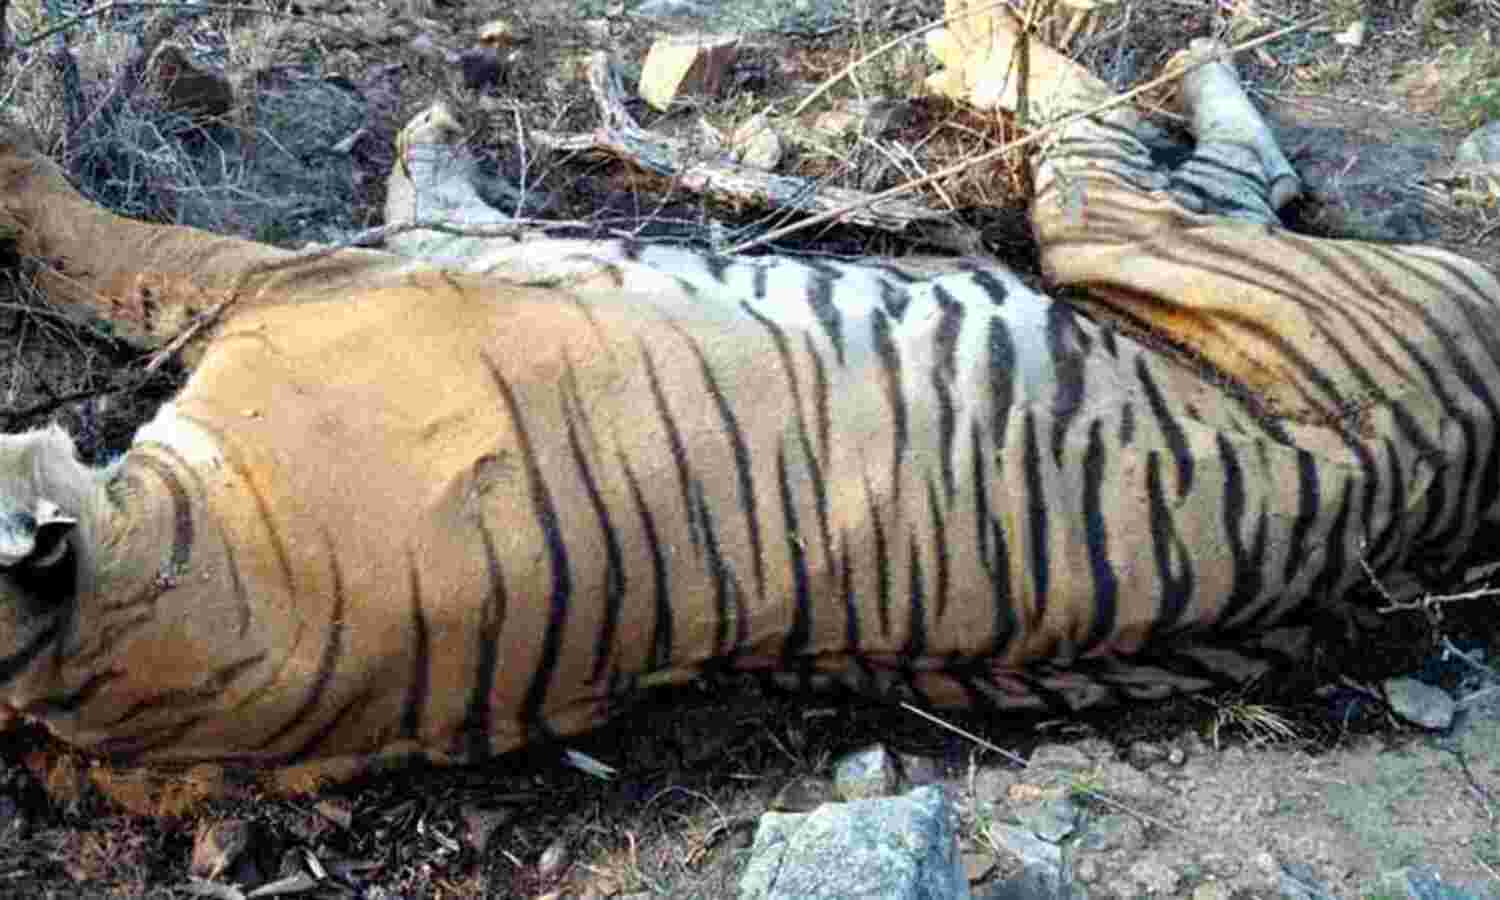 Most Tiger Deaths In Madhya Pradesh, Maharashtra Over 8 Years